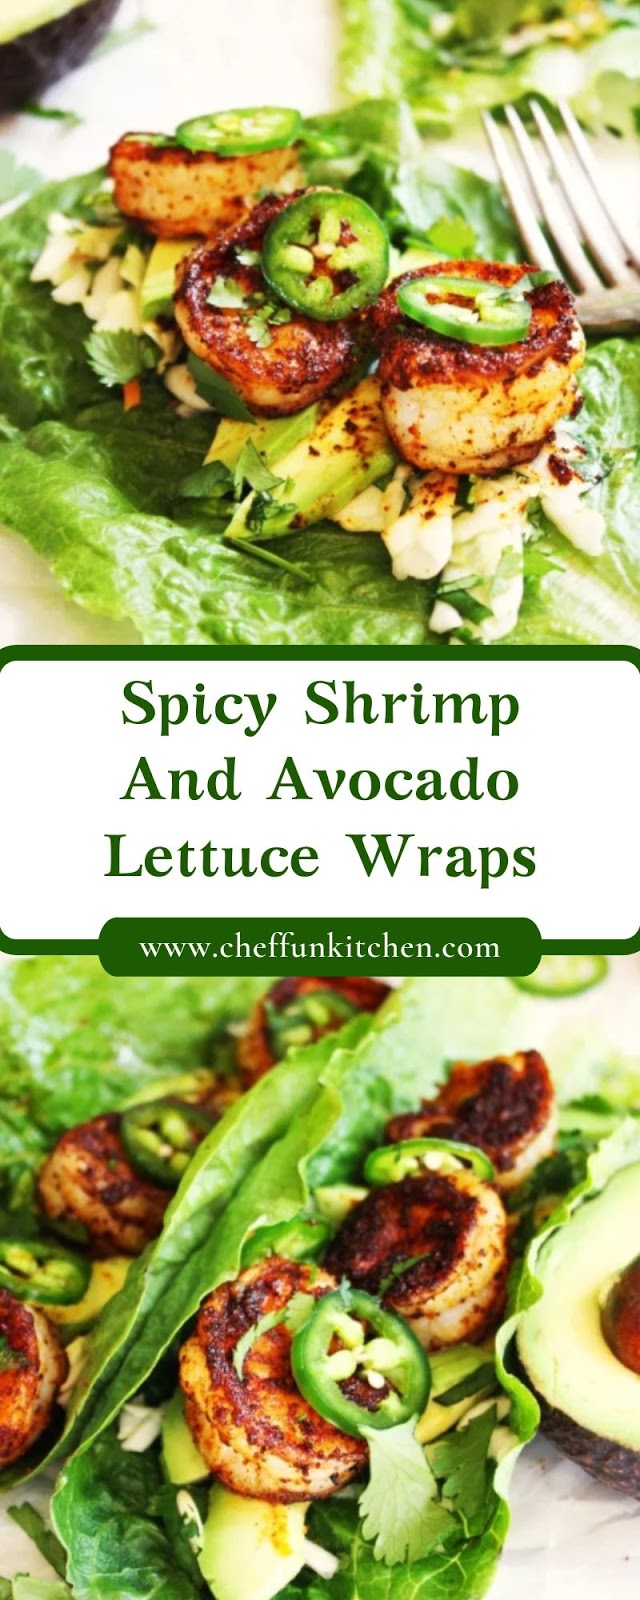 Spicy Shrimp And Avocado Lettuce Wraps